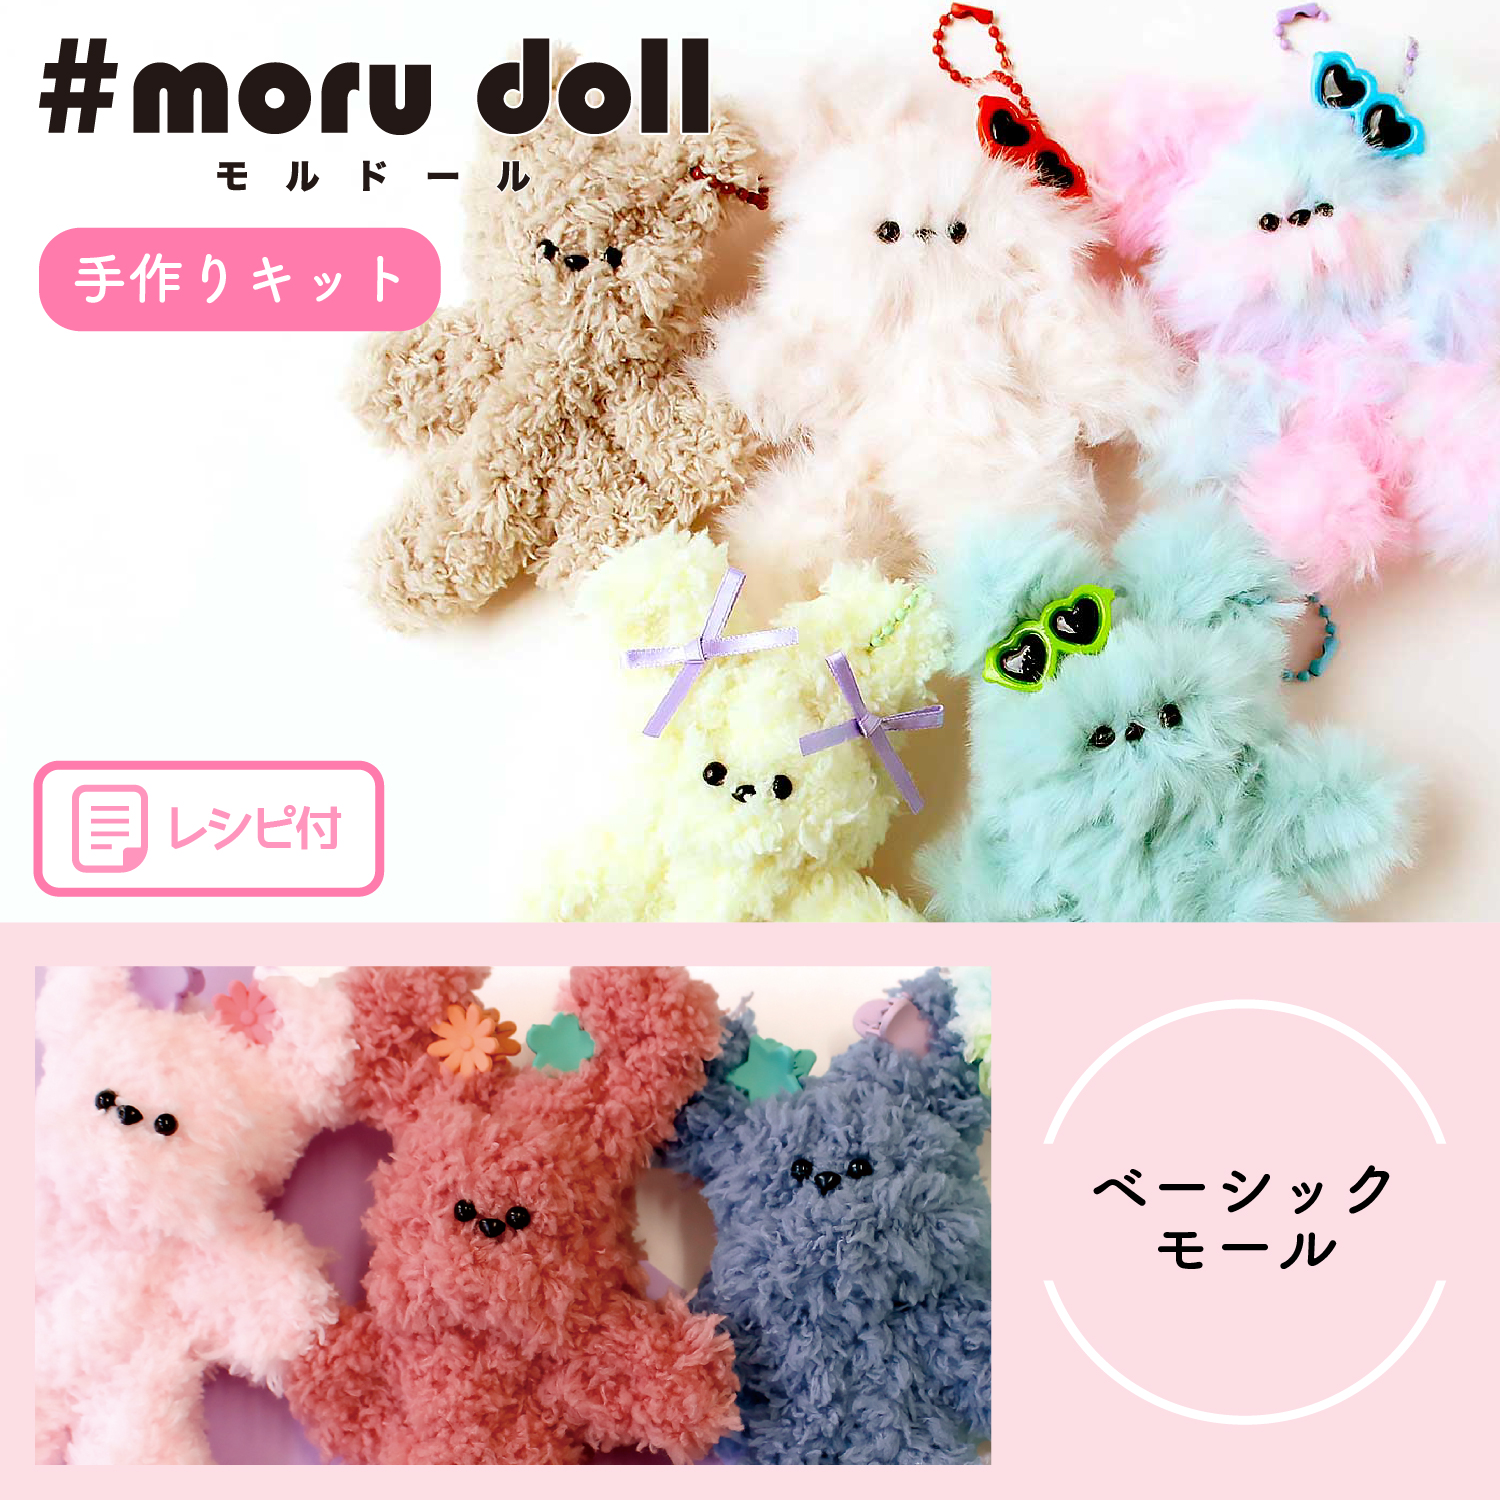 MOL-KIT Moll doll Korean miscellaneous goods Moldoll kit, basic mall (bag)